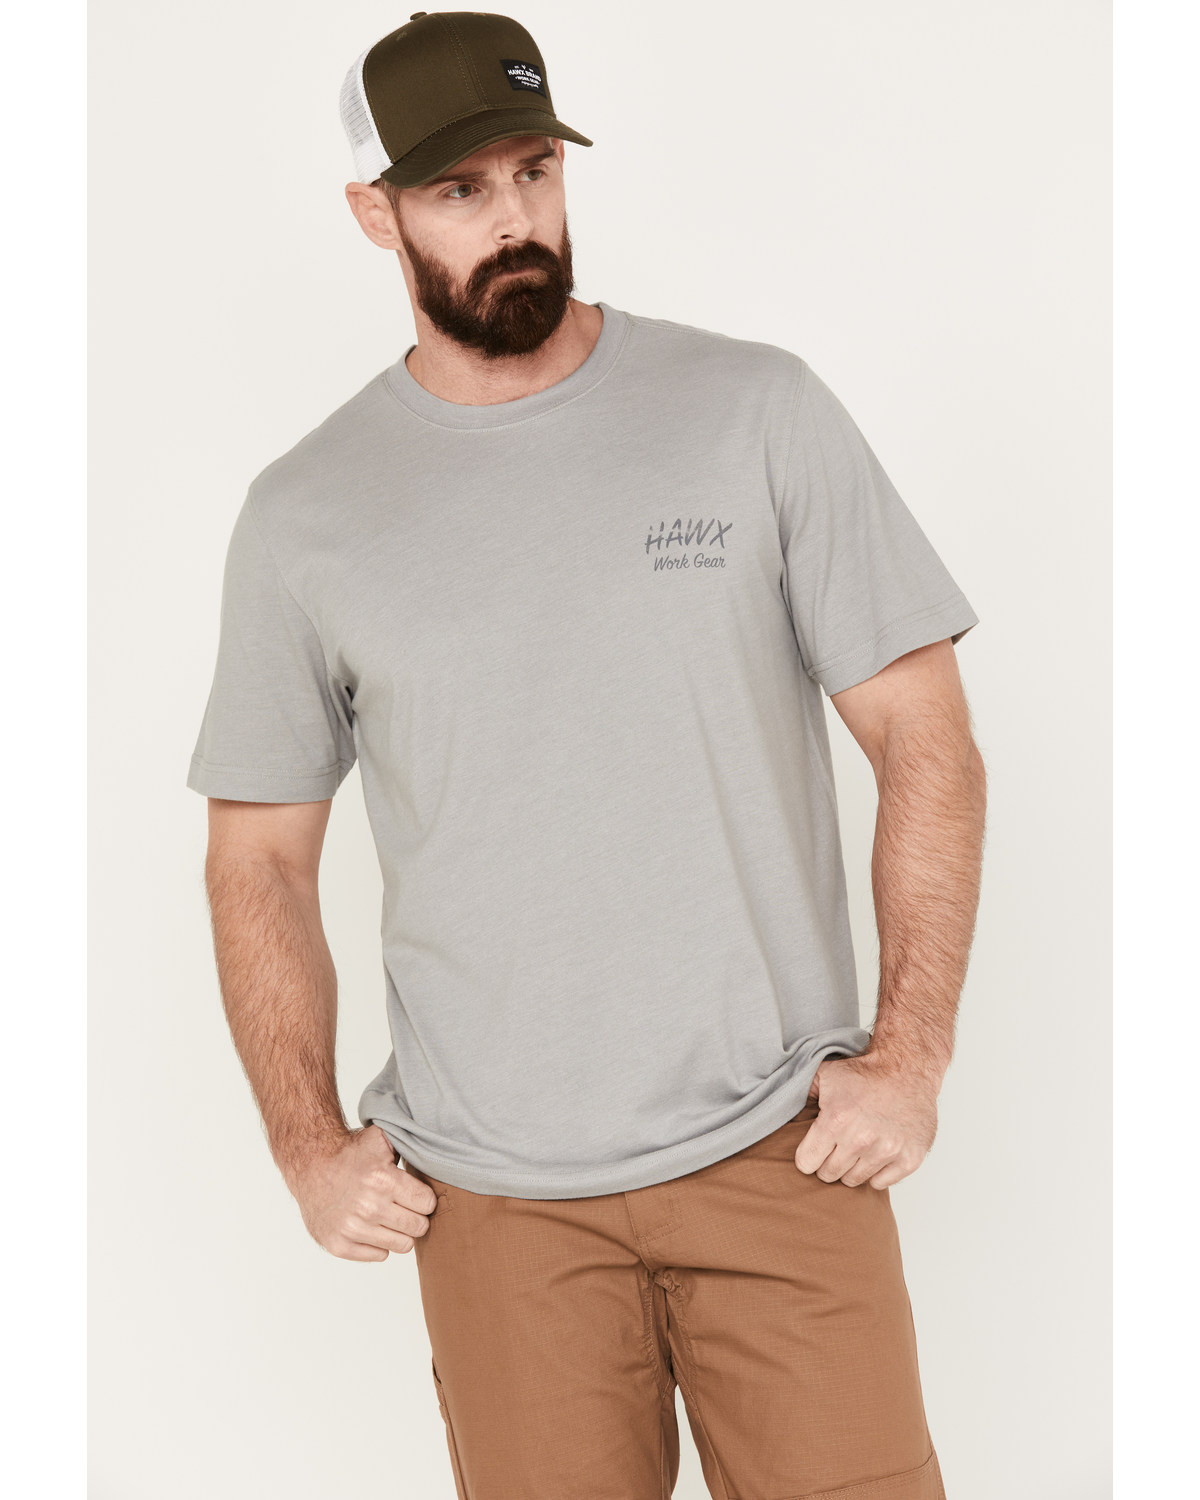 Hawx Men's Graphic Short Sleeve T-Shirt